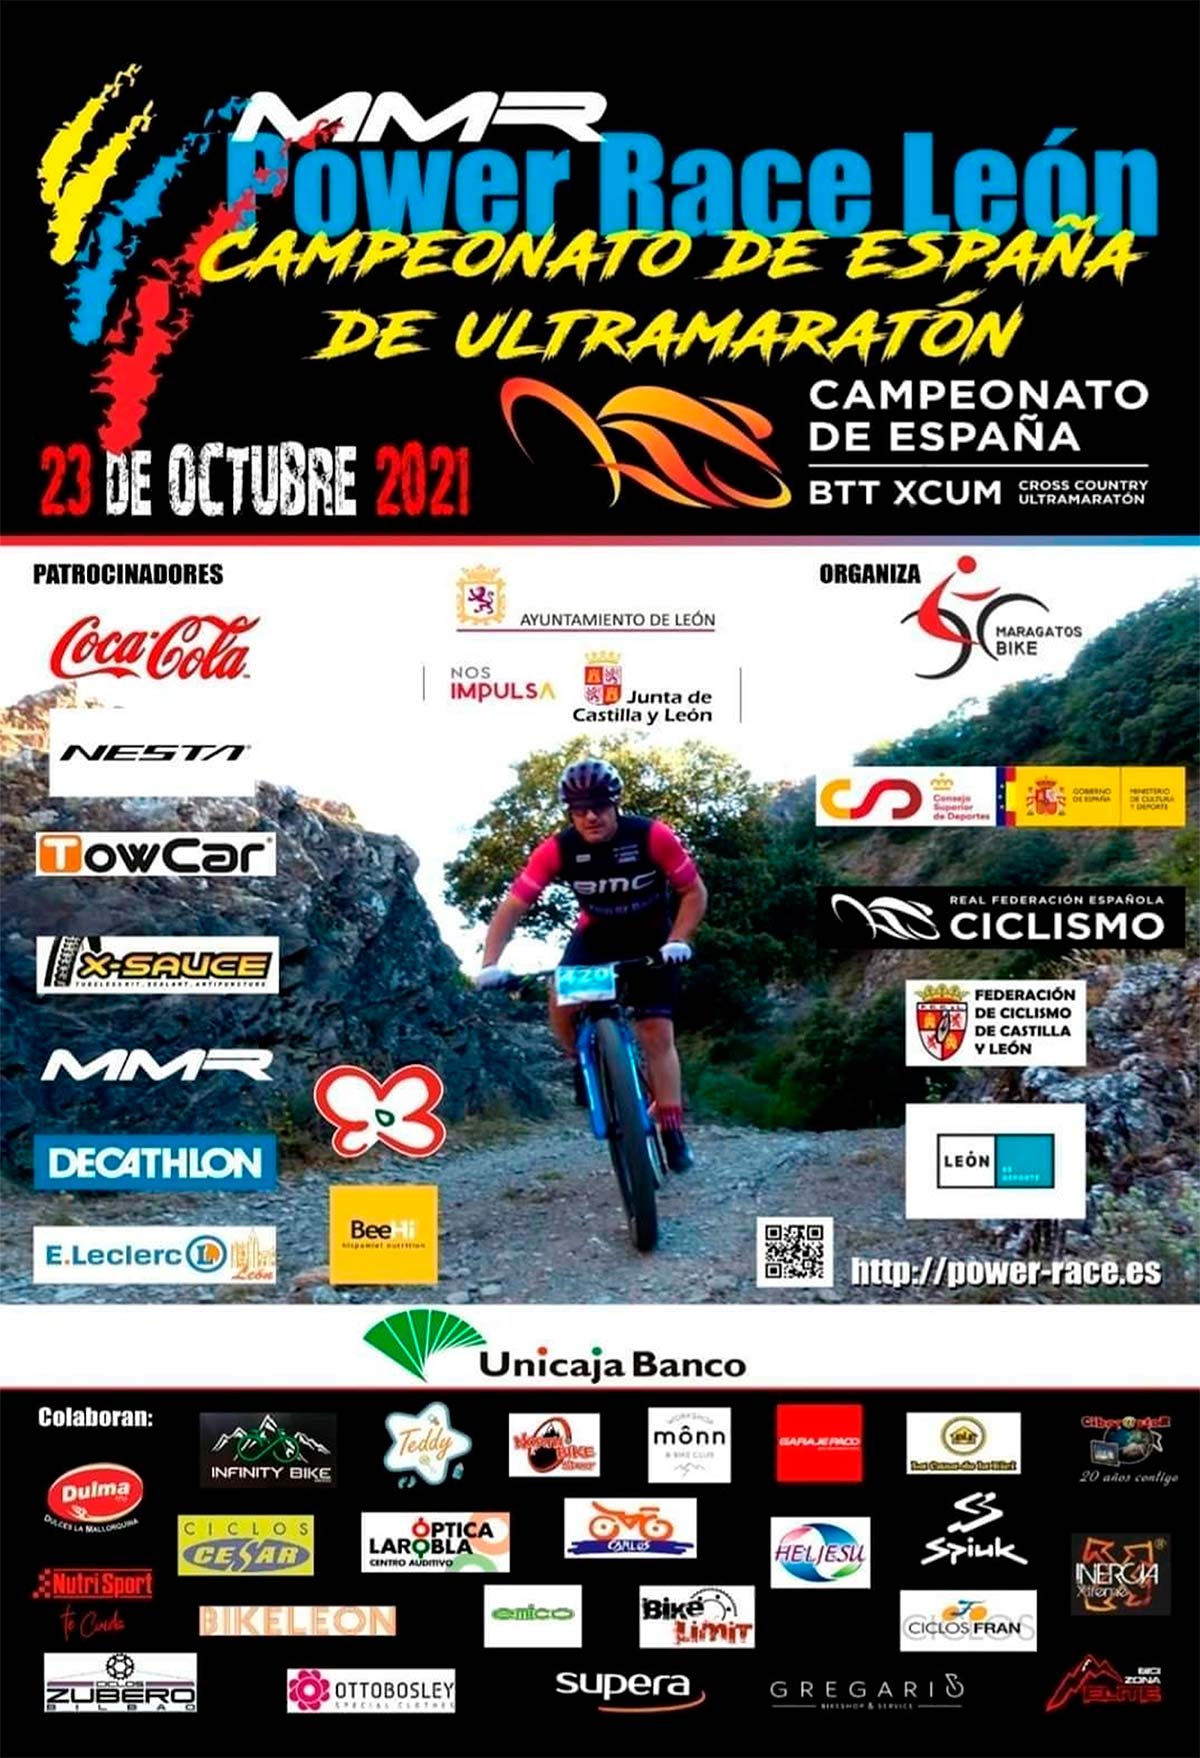 En TodoMountainBike: El Campeonato de España de XC Ultramaratón se decide este fin de semana en la Power Race Léon